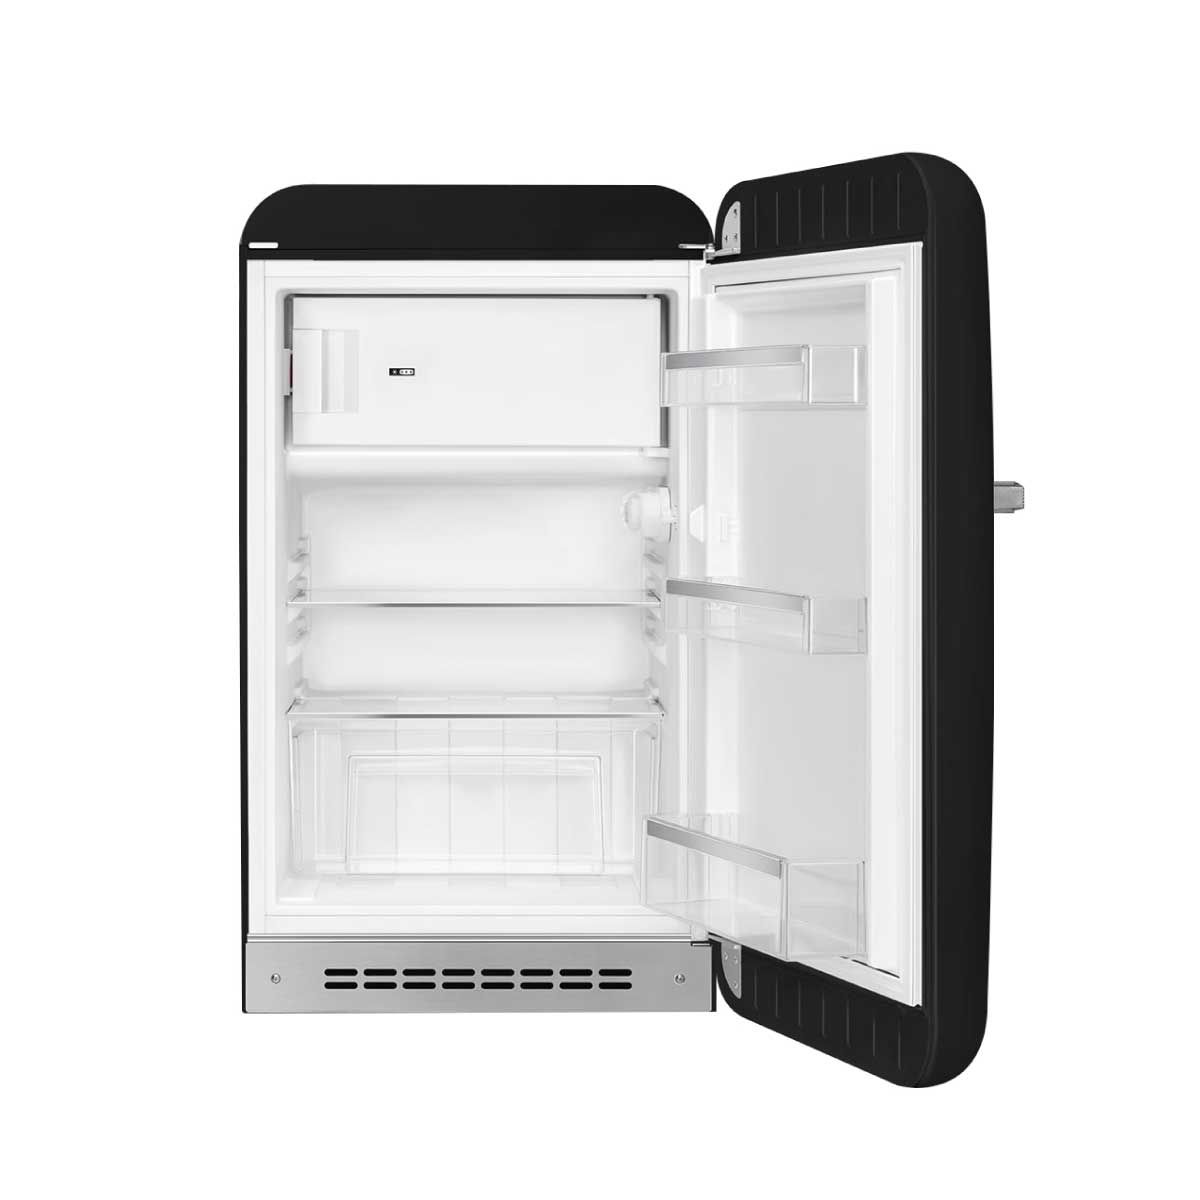 SMEG ตู้เย็น 1 ประตู 4.3 Q สไตล์ 50 Retro Aesthetic รุ่น FAB10RBL5 สีดำ